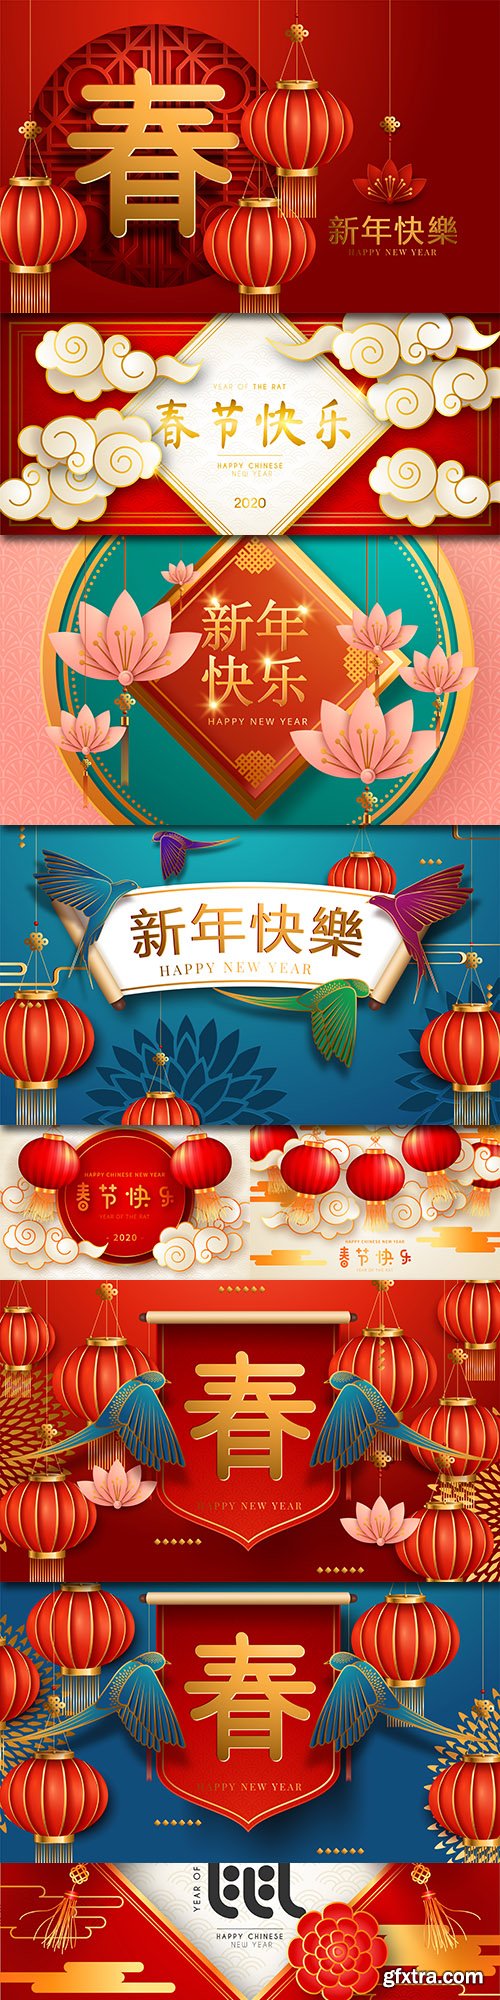 Chinese New Year 2020 Rat symbol illustration 6